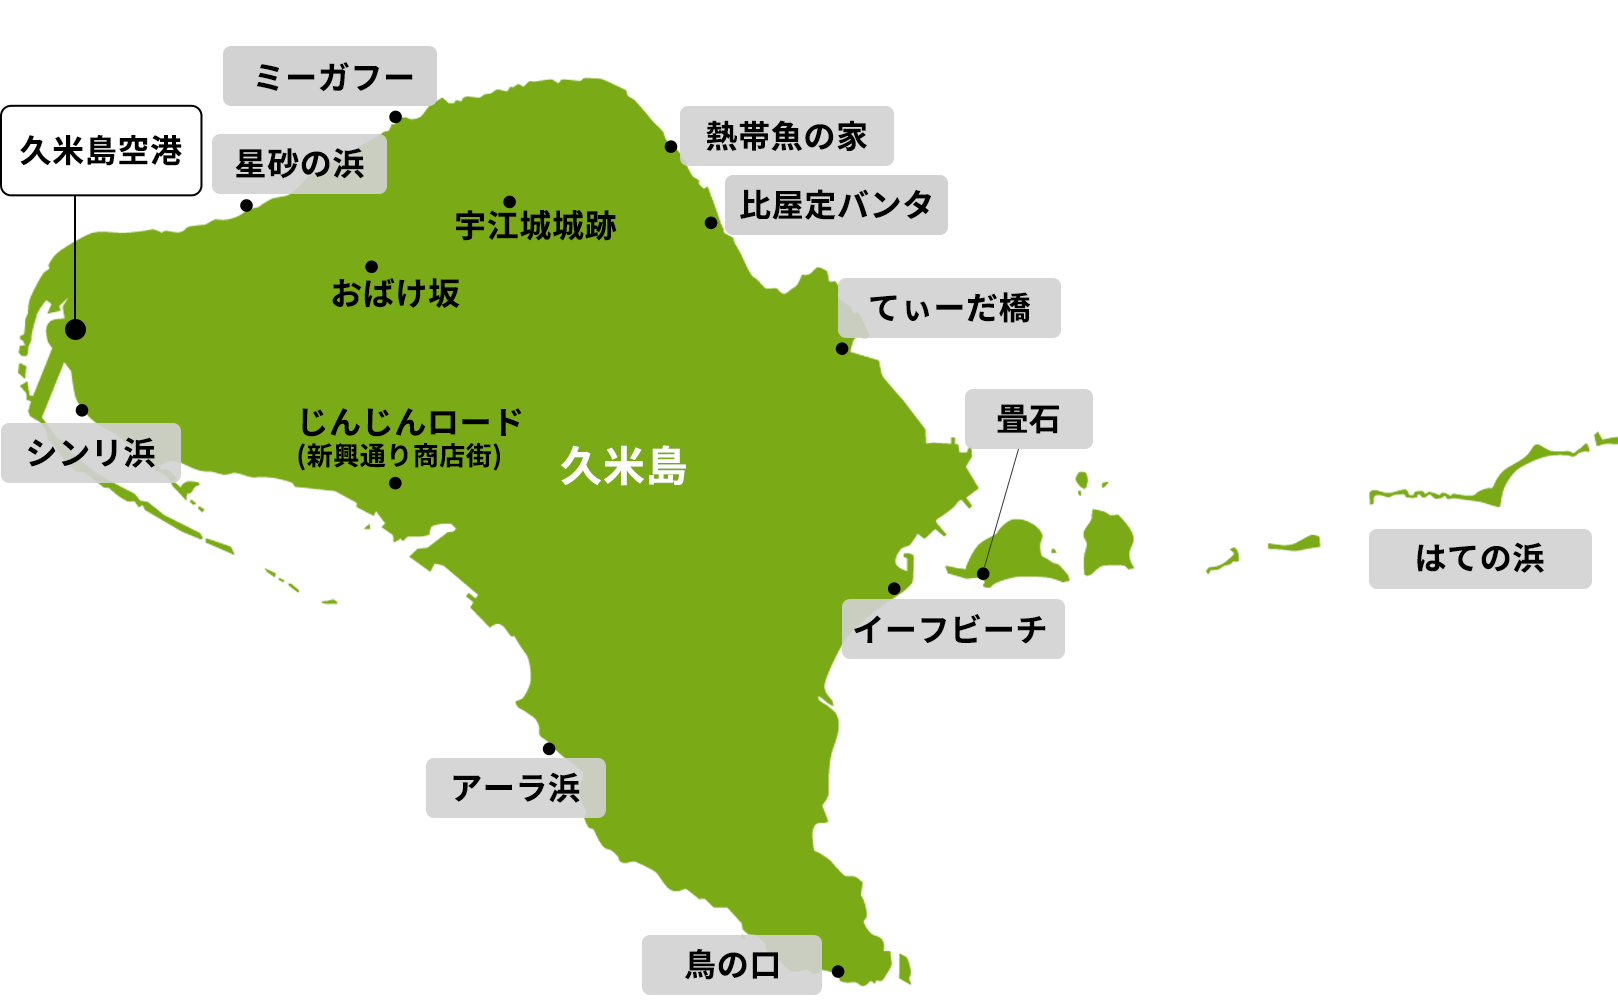 久米島MAP